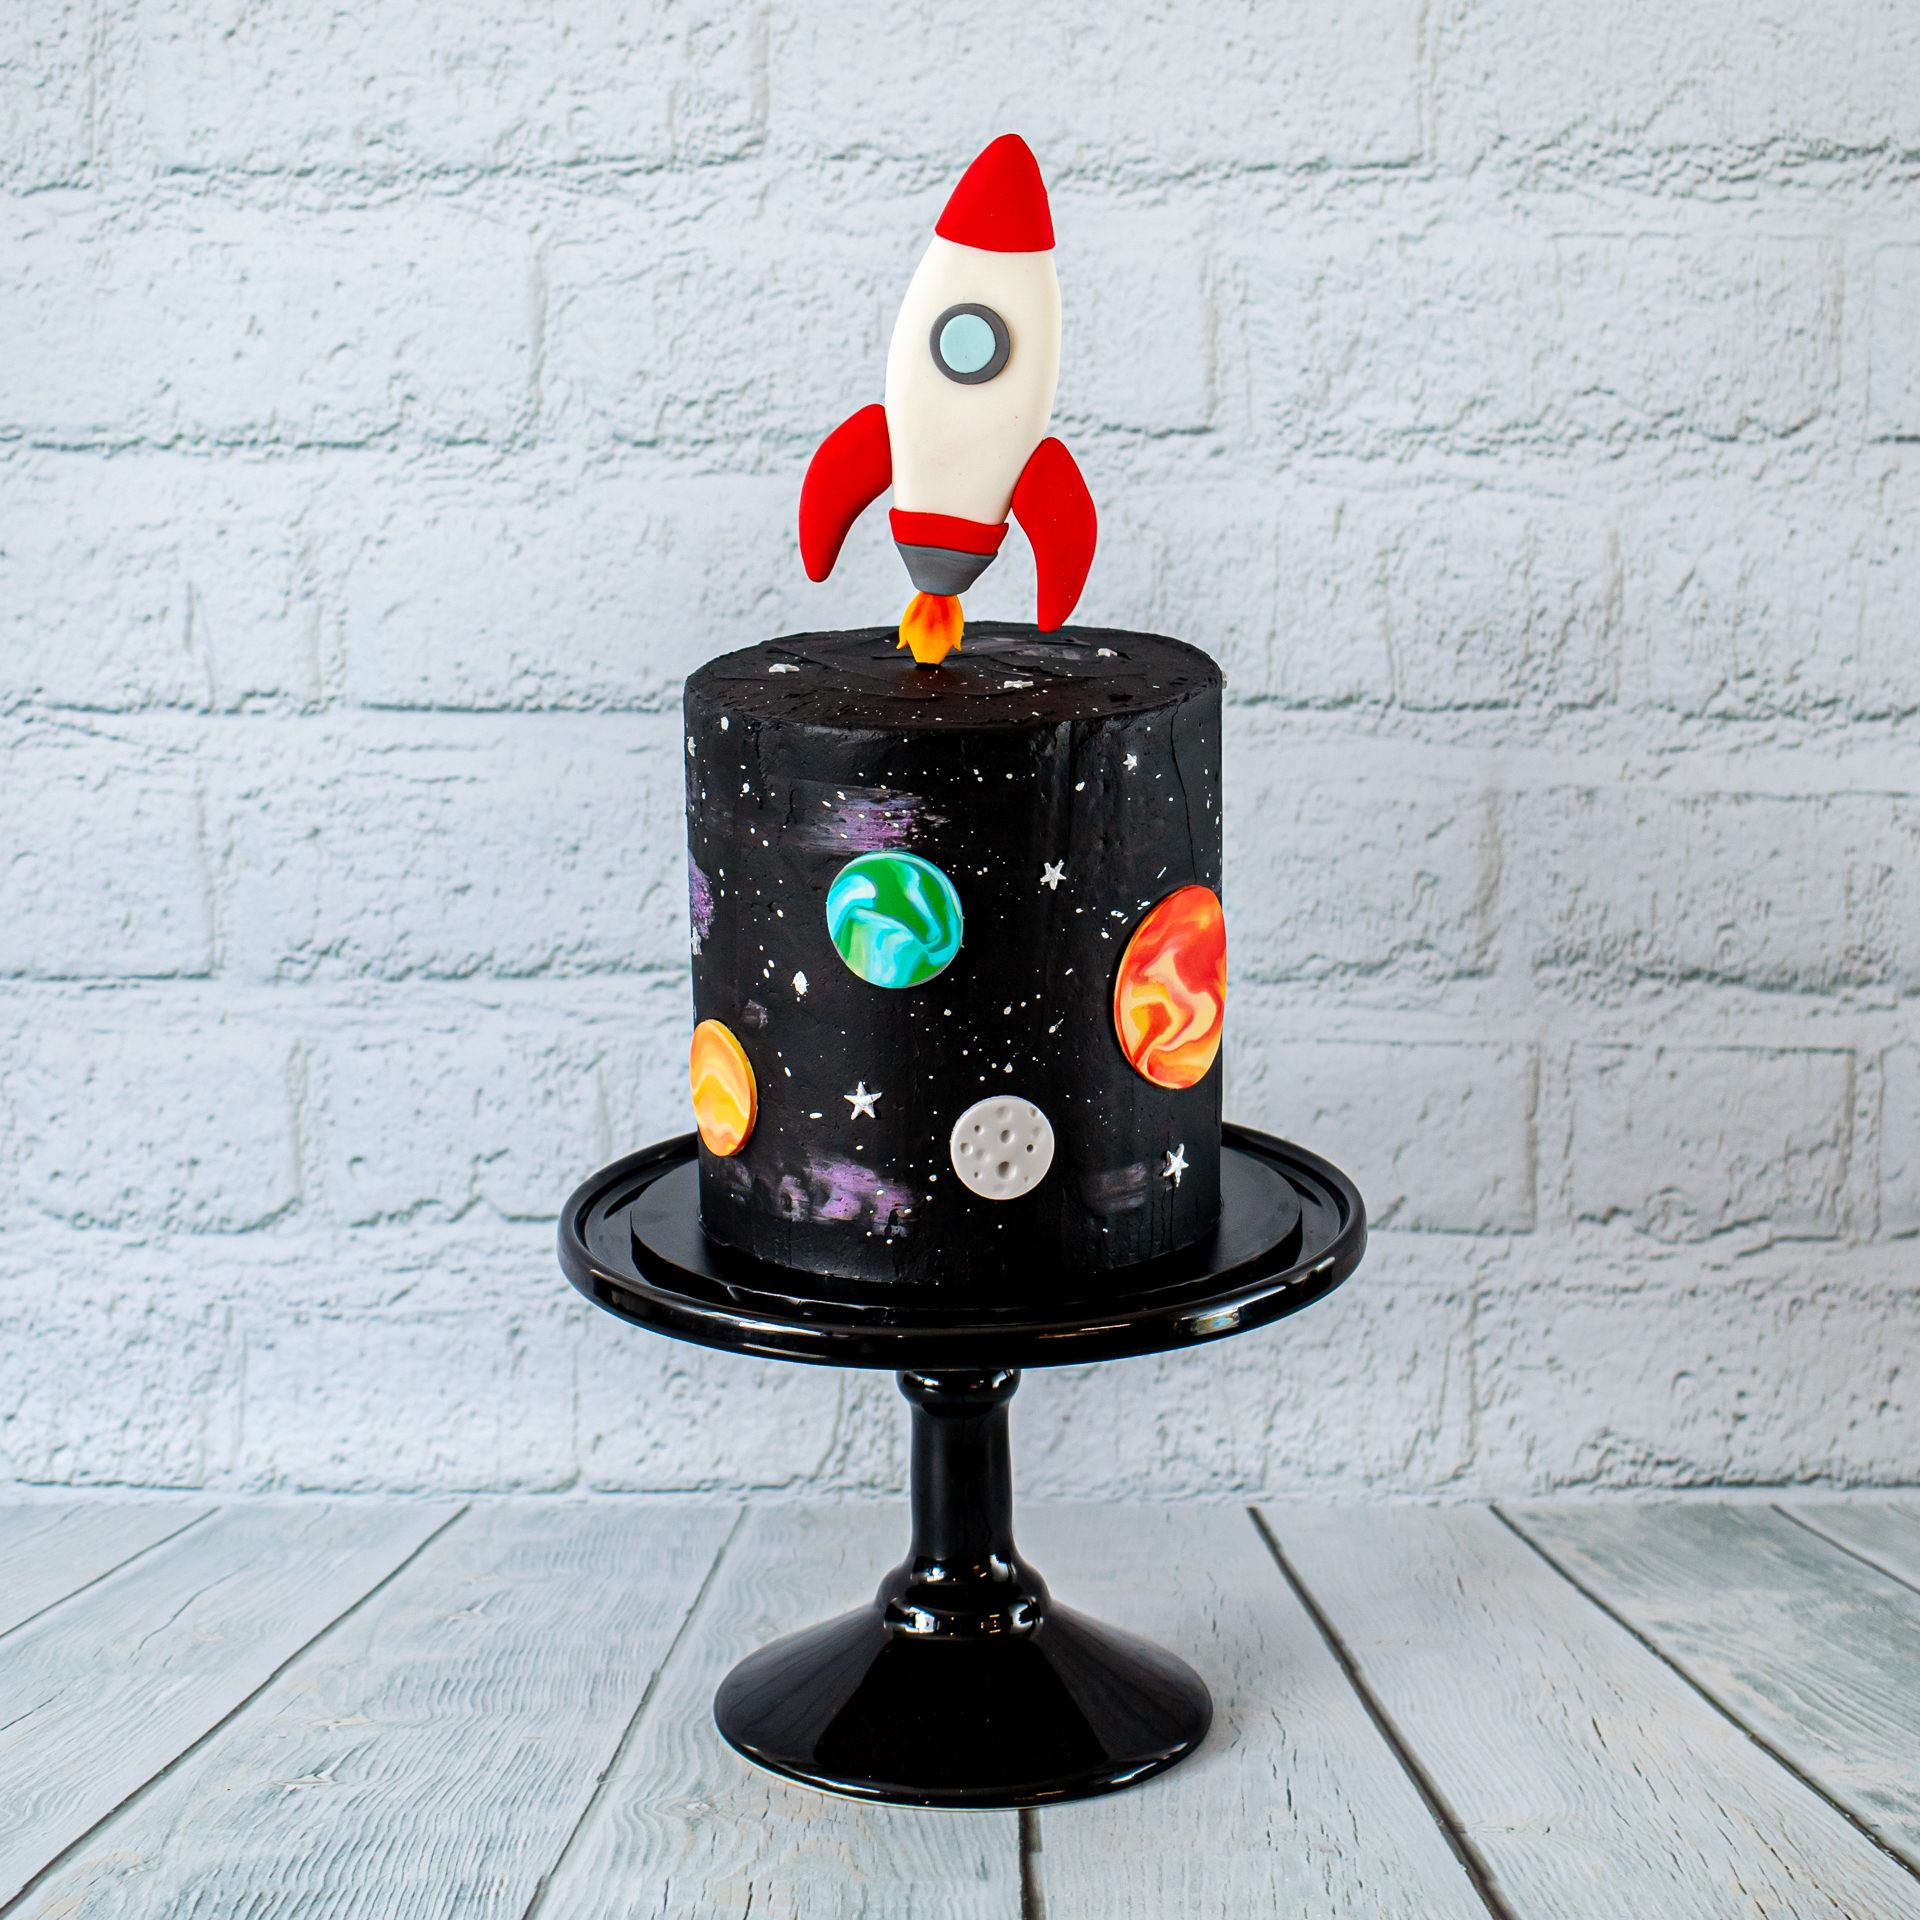 39 Cake design Ideas 2021 : Space-Themed Birthday Cake